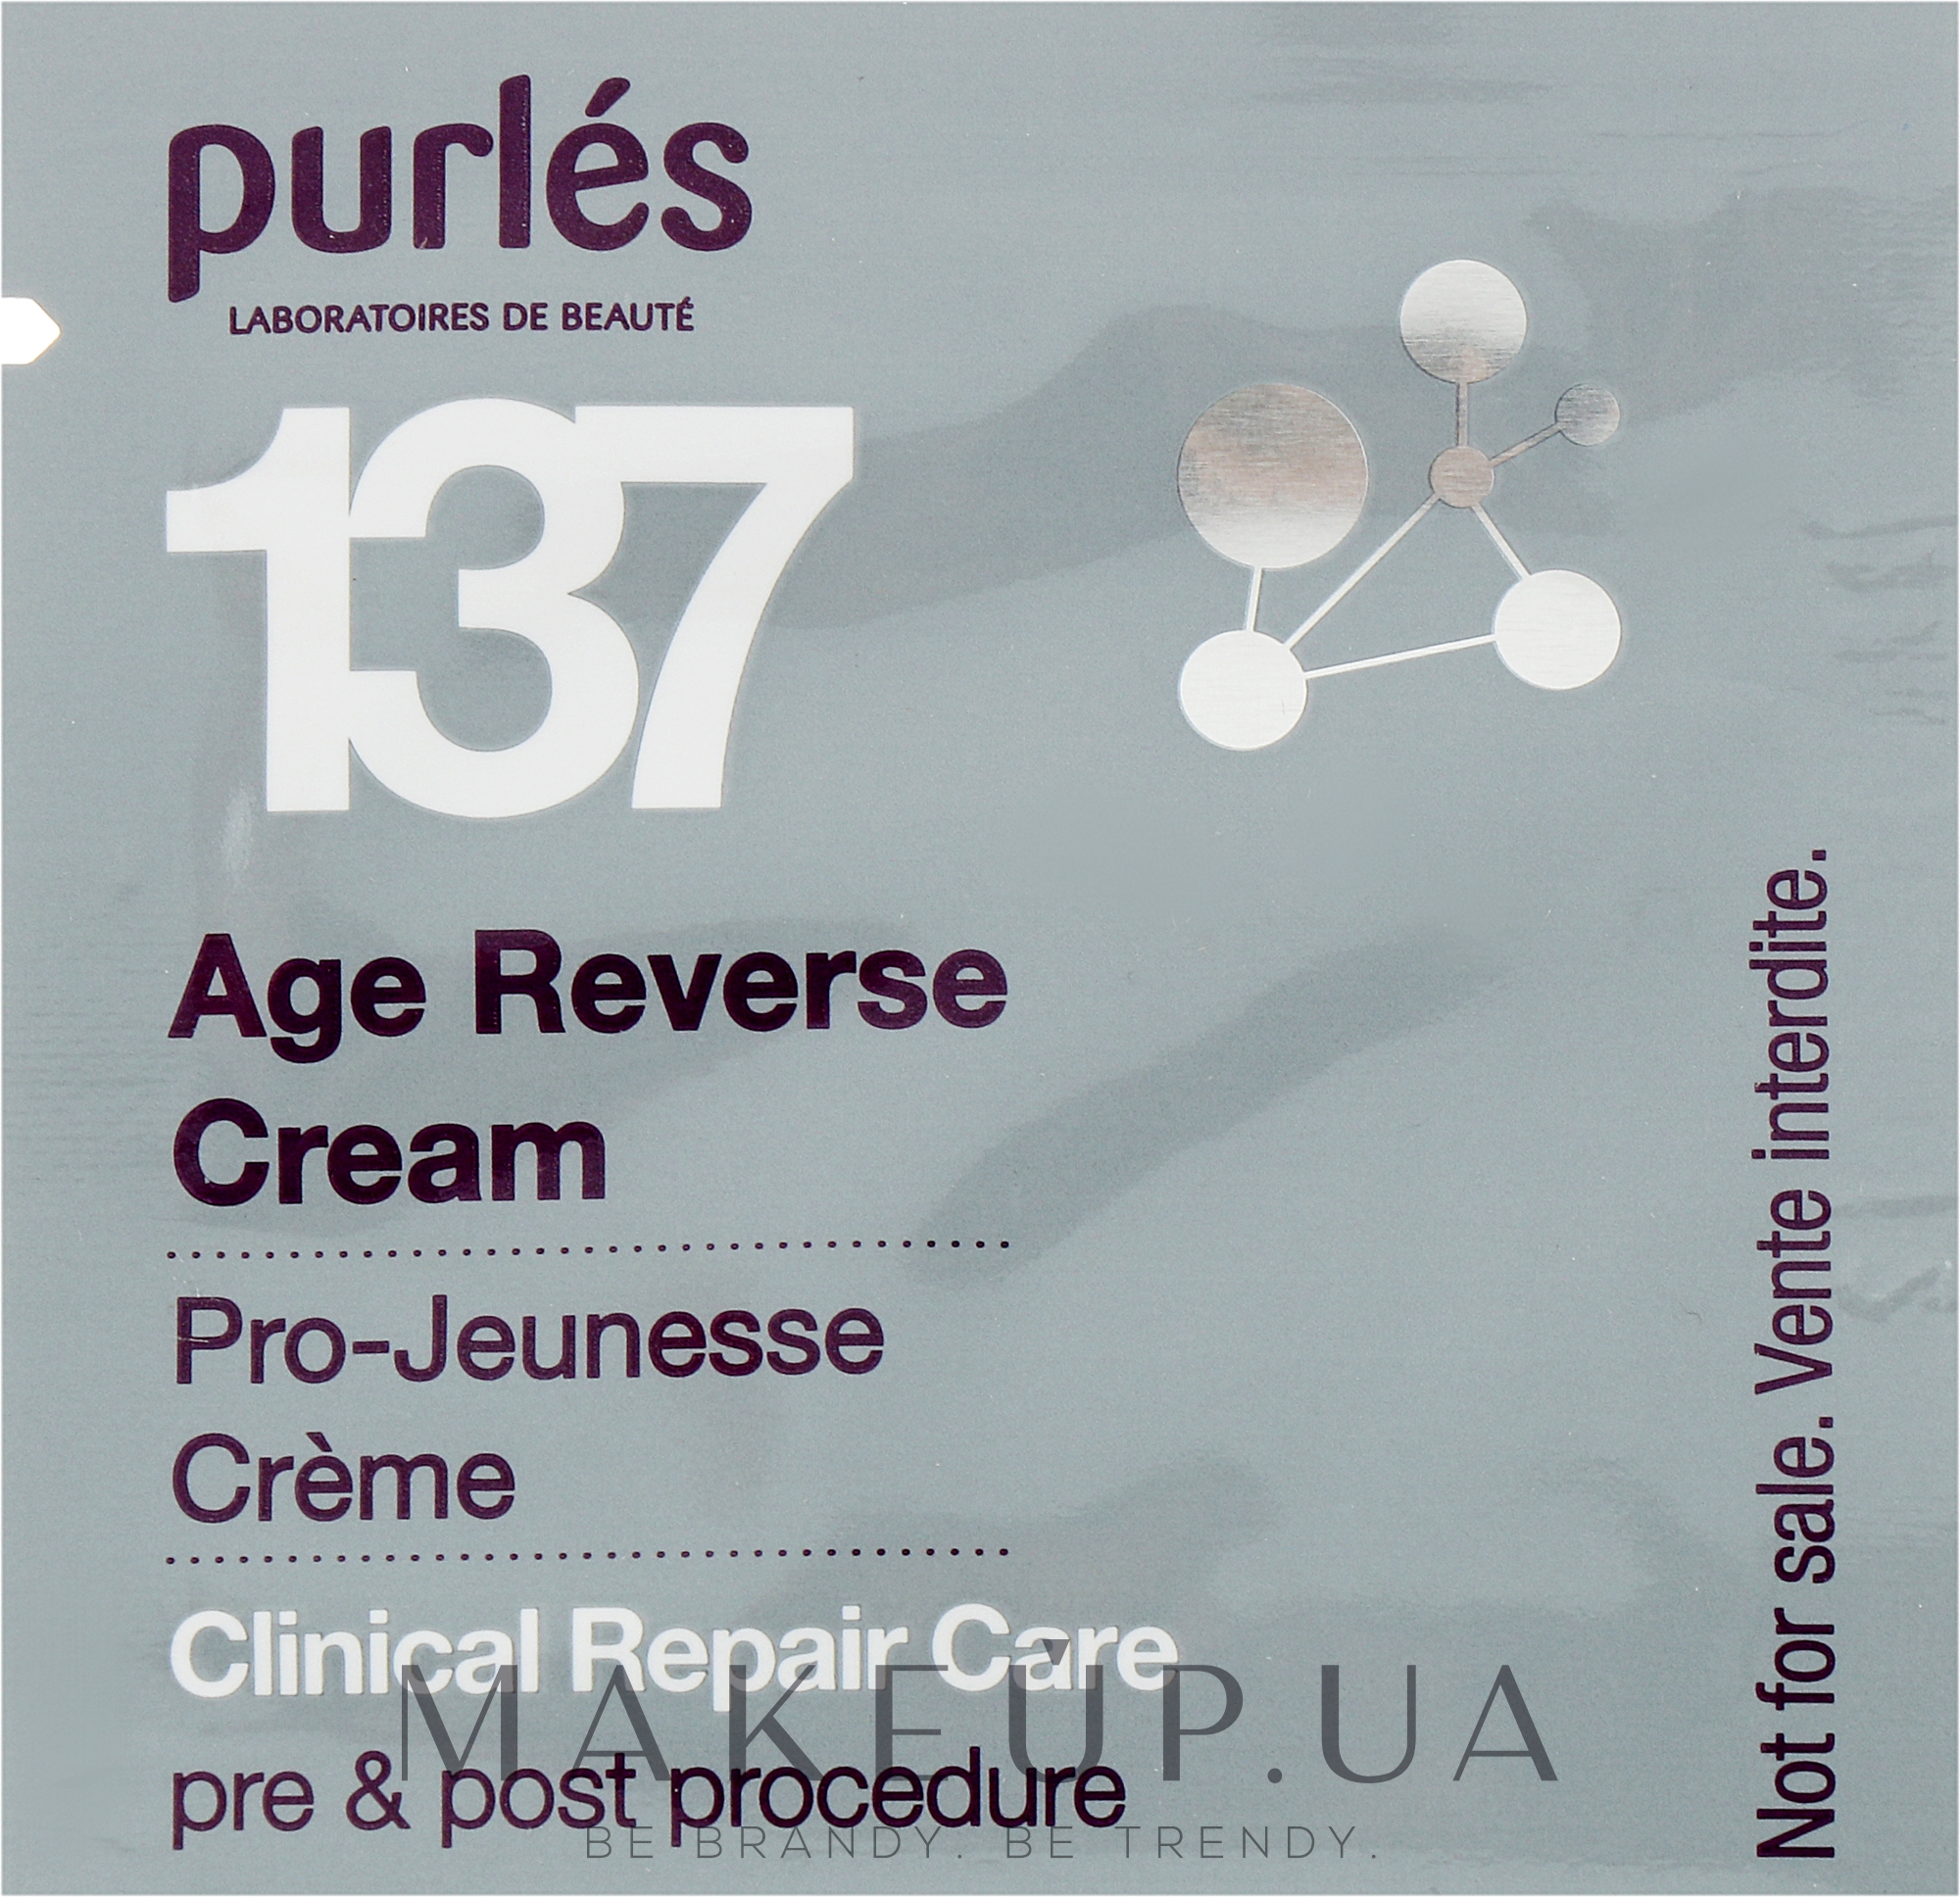 Омолоджуючий крем для обличчя - Purles Clinical Repair Care 137 Age Reverse Cream (пробник) — фото 1ml